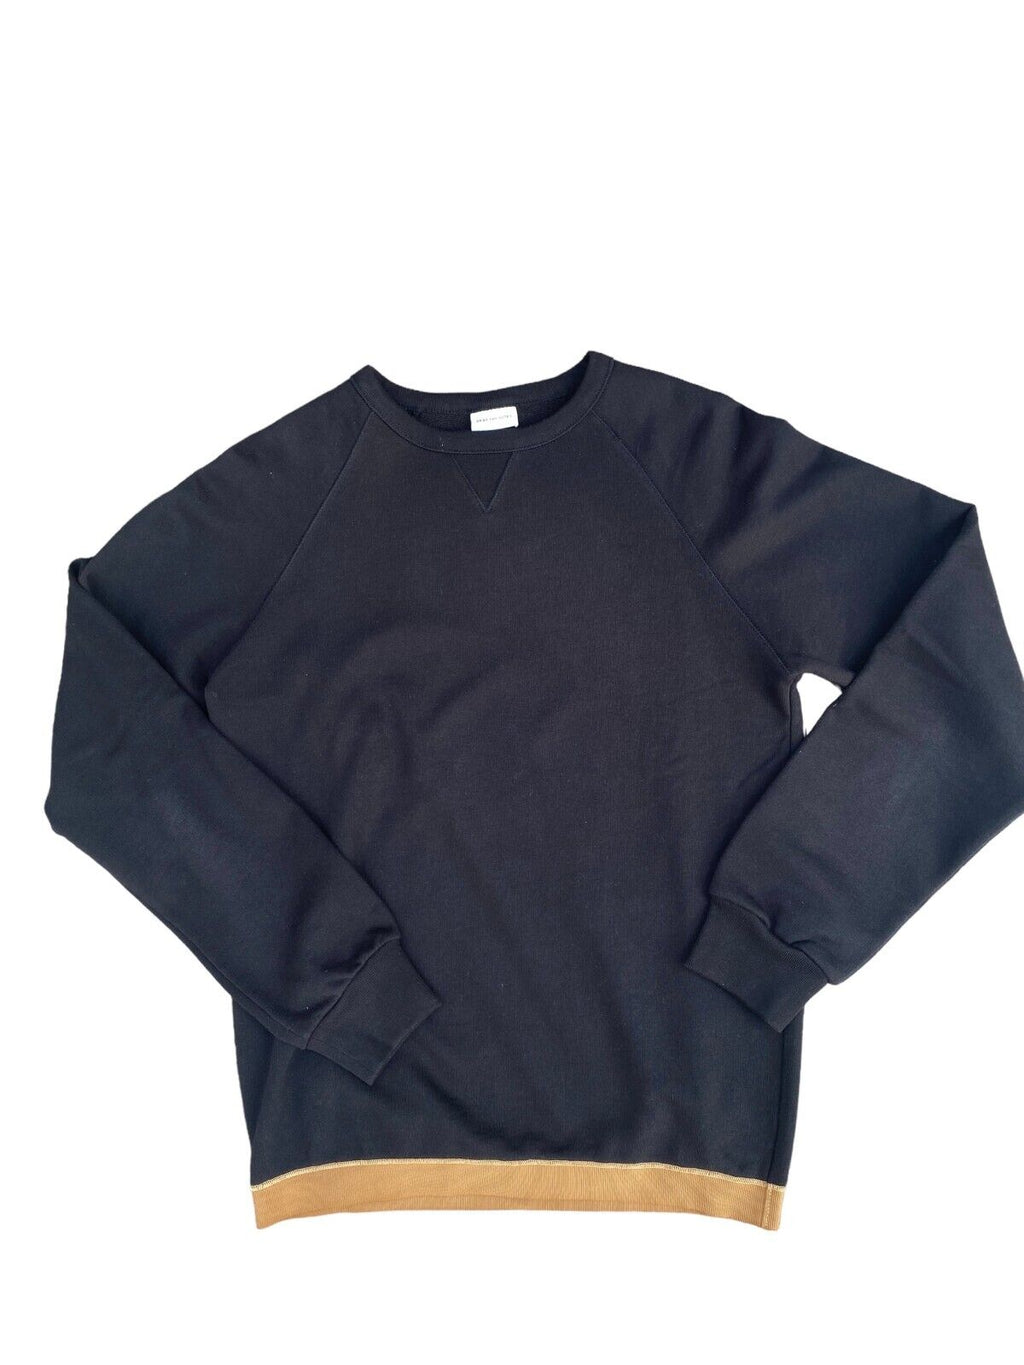 Black  Crewneck Sweatshirt Contrast Beige band at bottom Size S